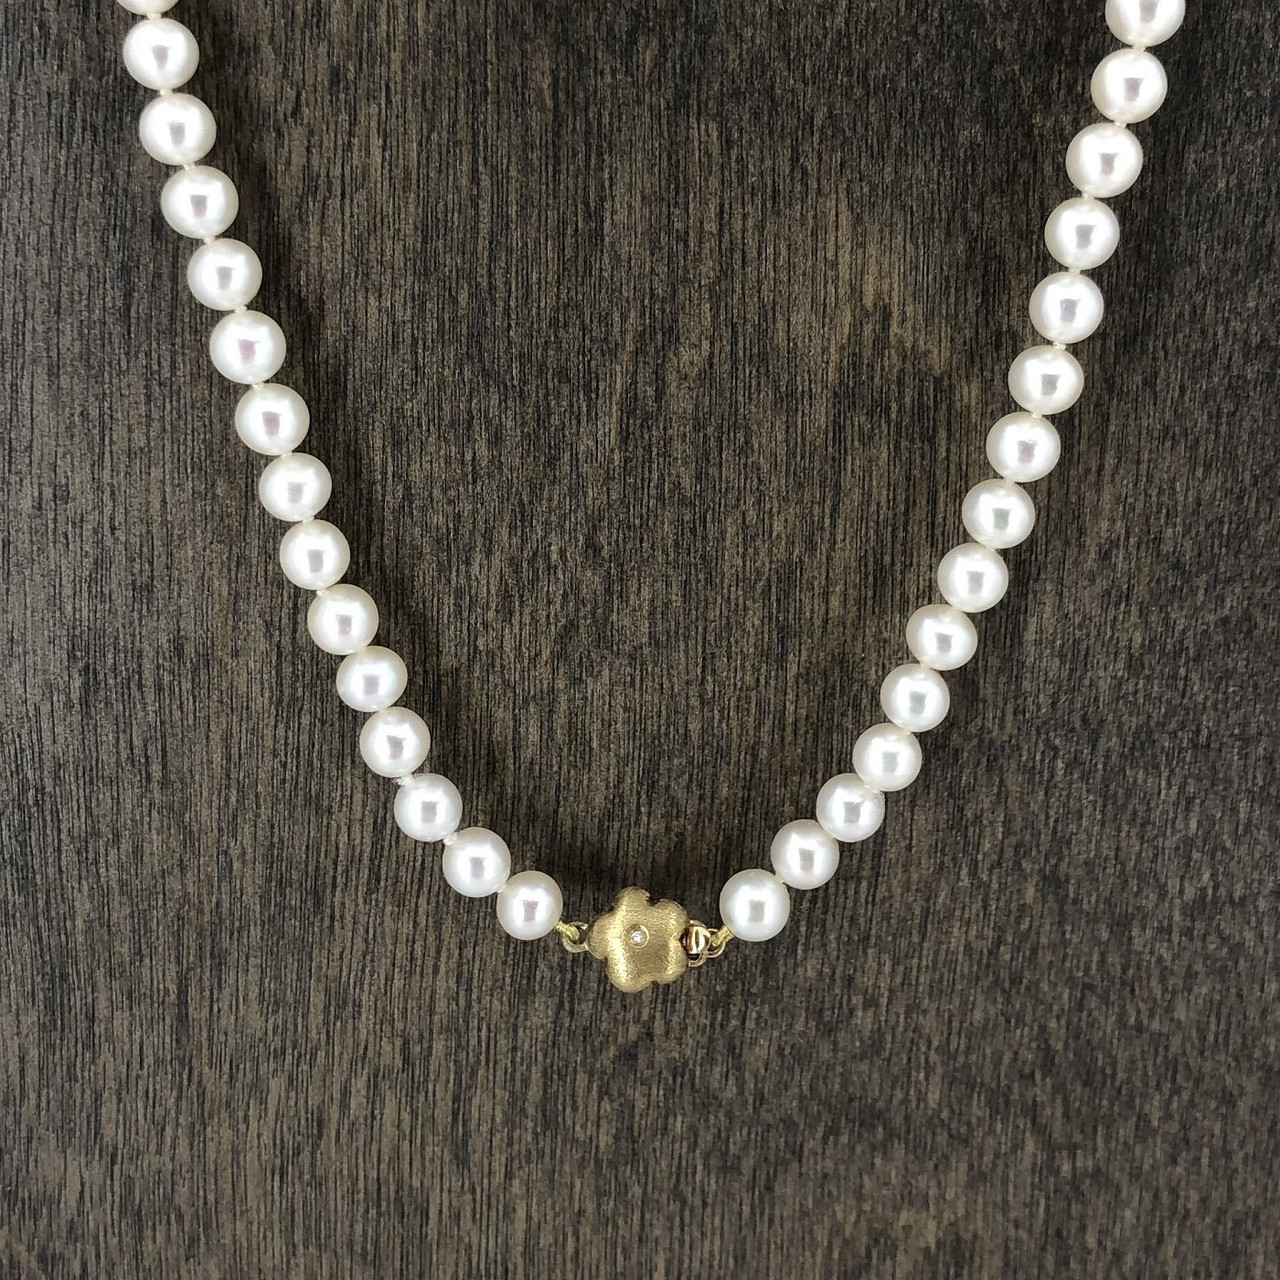 Set of Necklace and Bracelet Vintage Freshwater Pearls 14K Clasp 3 Multi  Strand